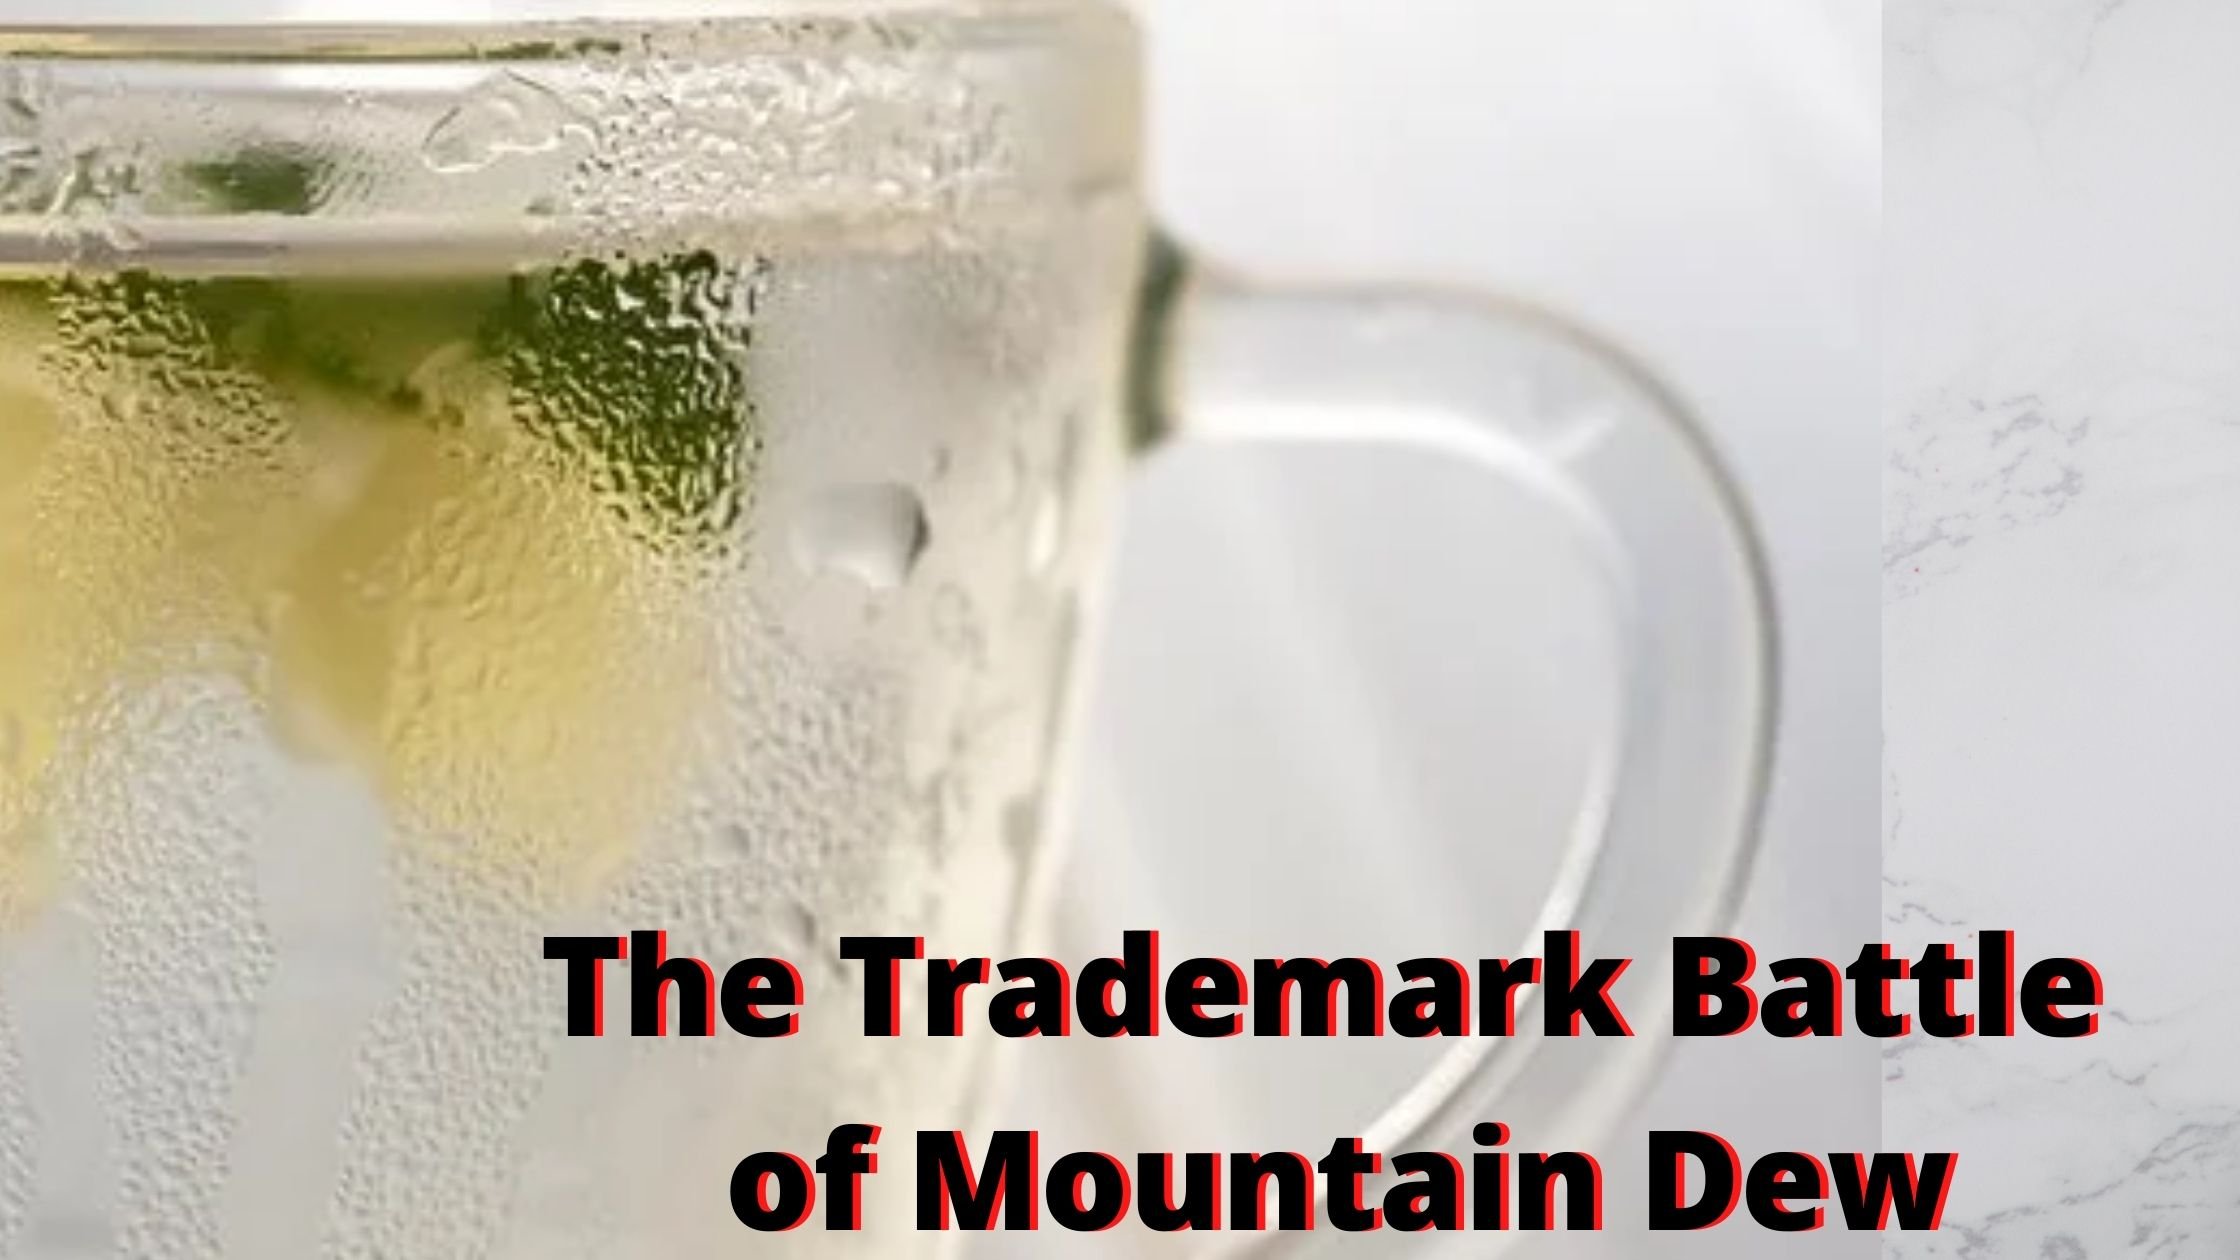 The Battle of Mountain Dew (Trademark Battle)